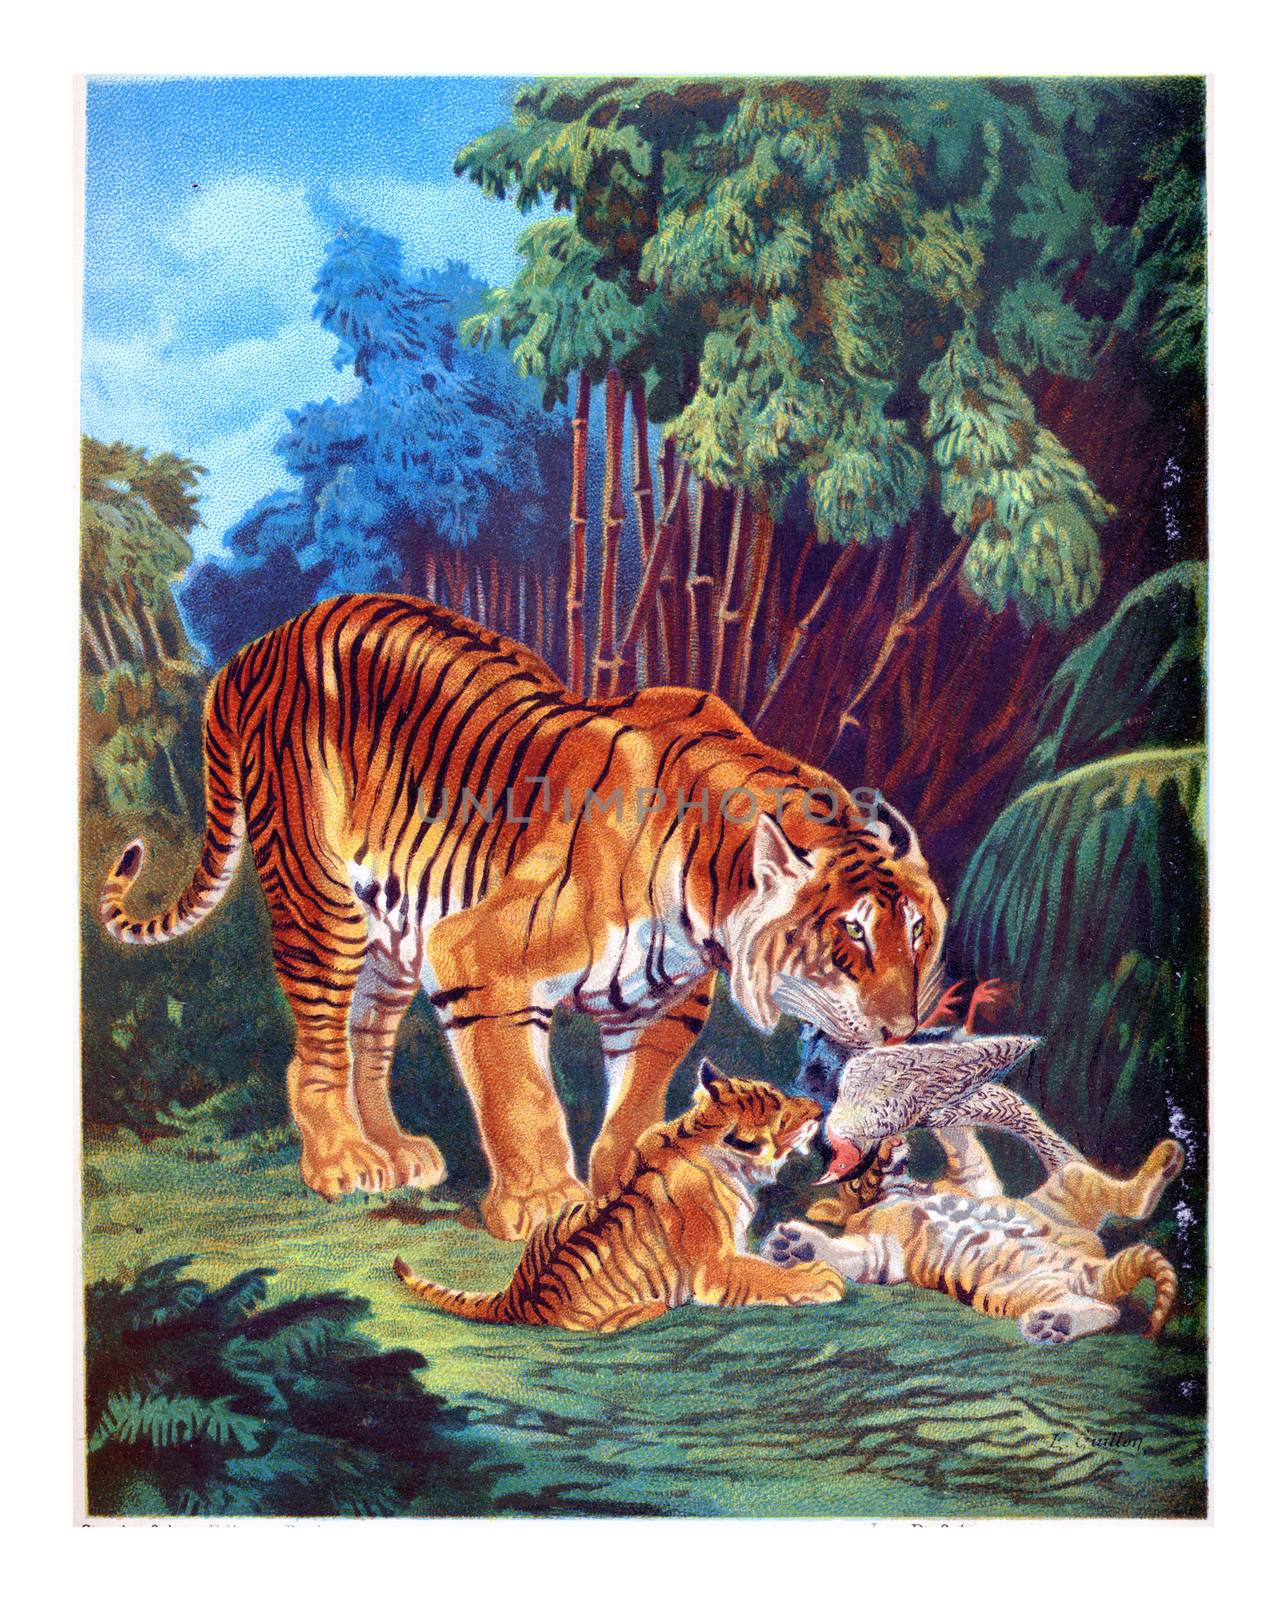 The Tiger with cubs eating its prey, vintage engraved illustration.